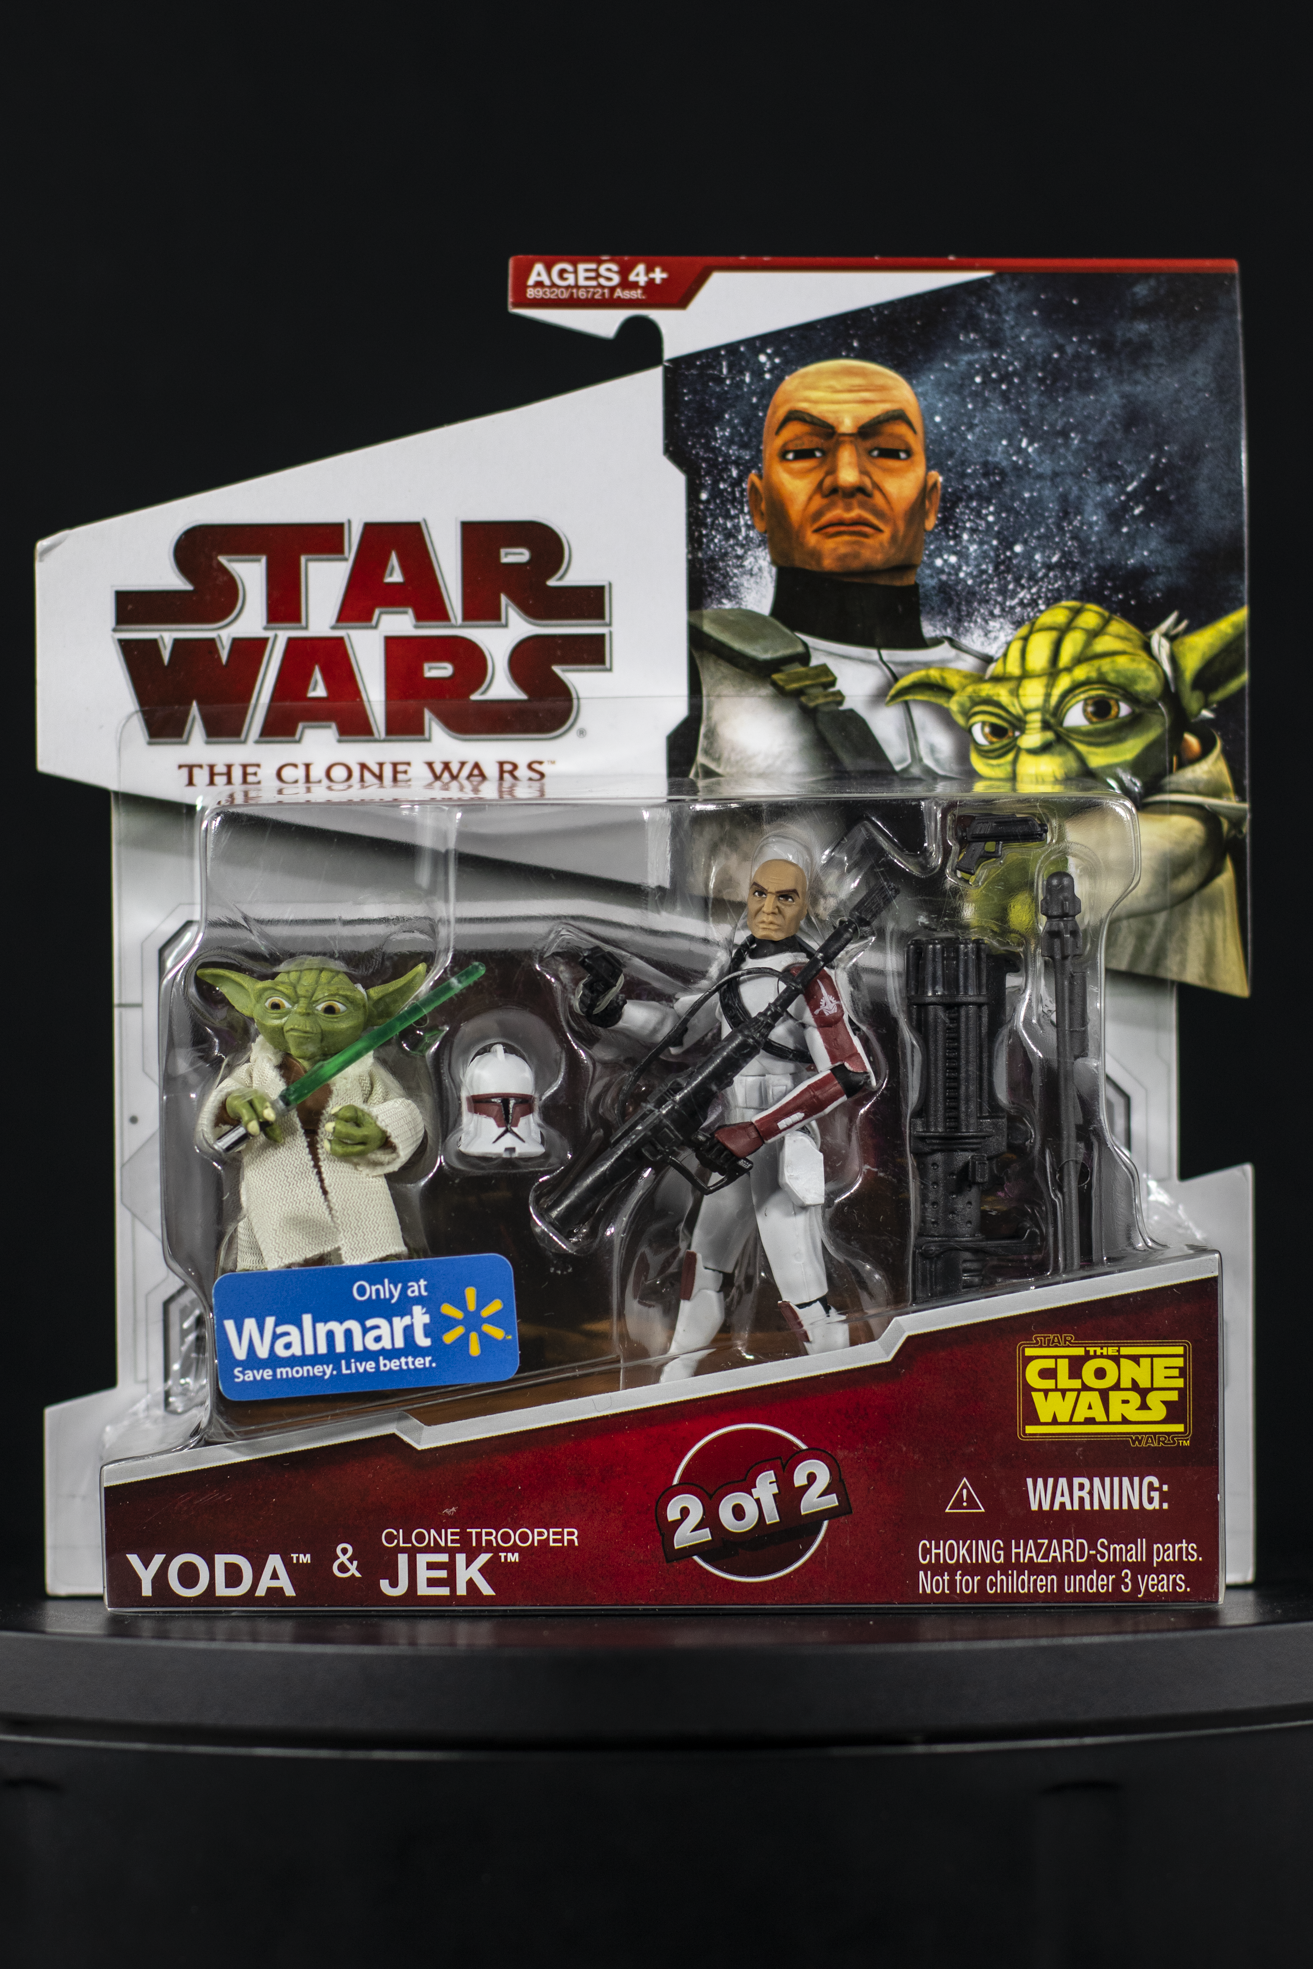 Star Wars: The Clone Wars "Yoda & Clone Trooper Jek" 2 of 2